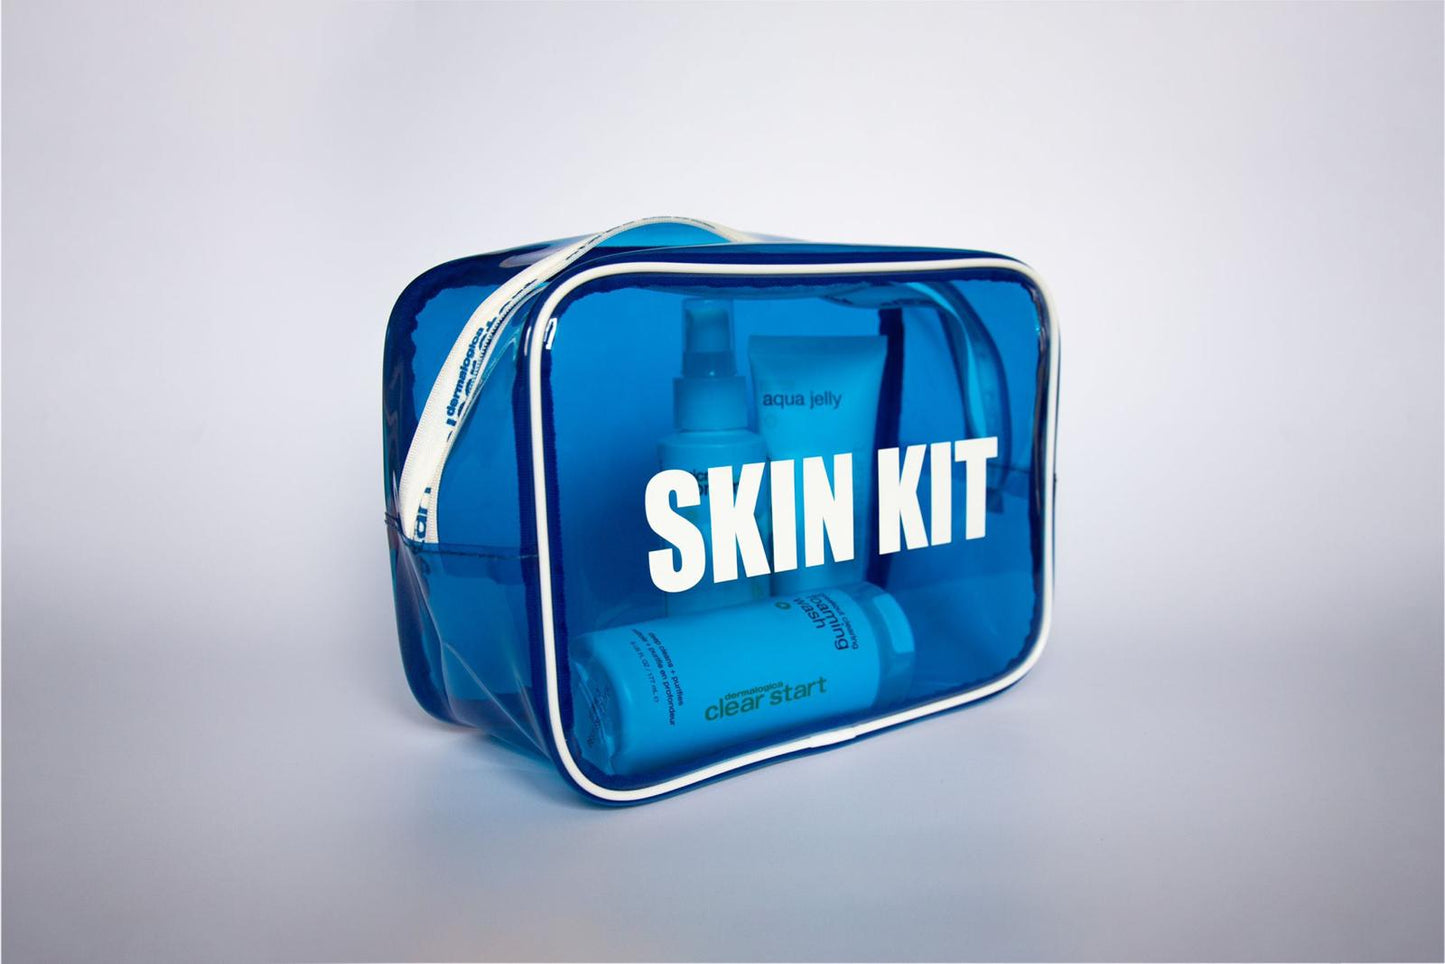 Clear Start Skin Kit Wash Bag (7472584425650)